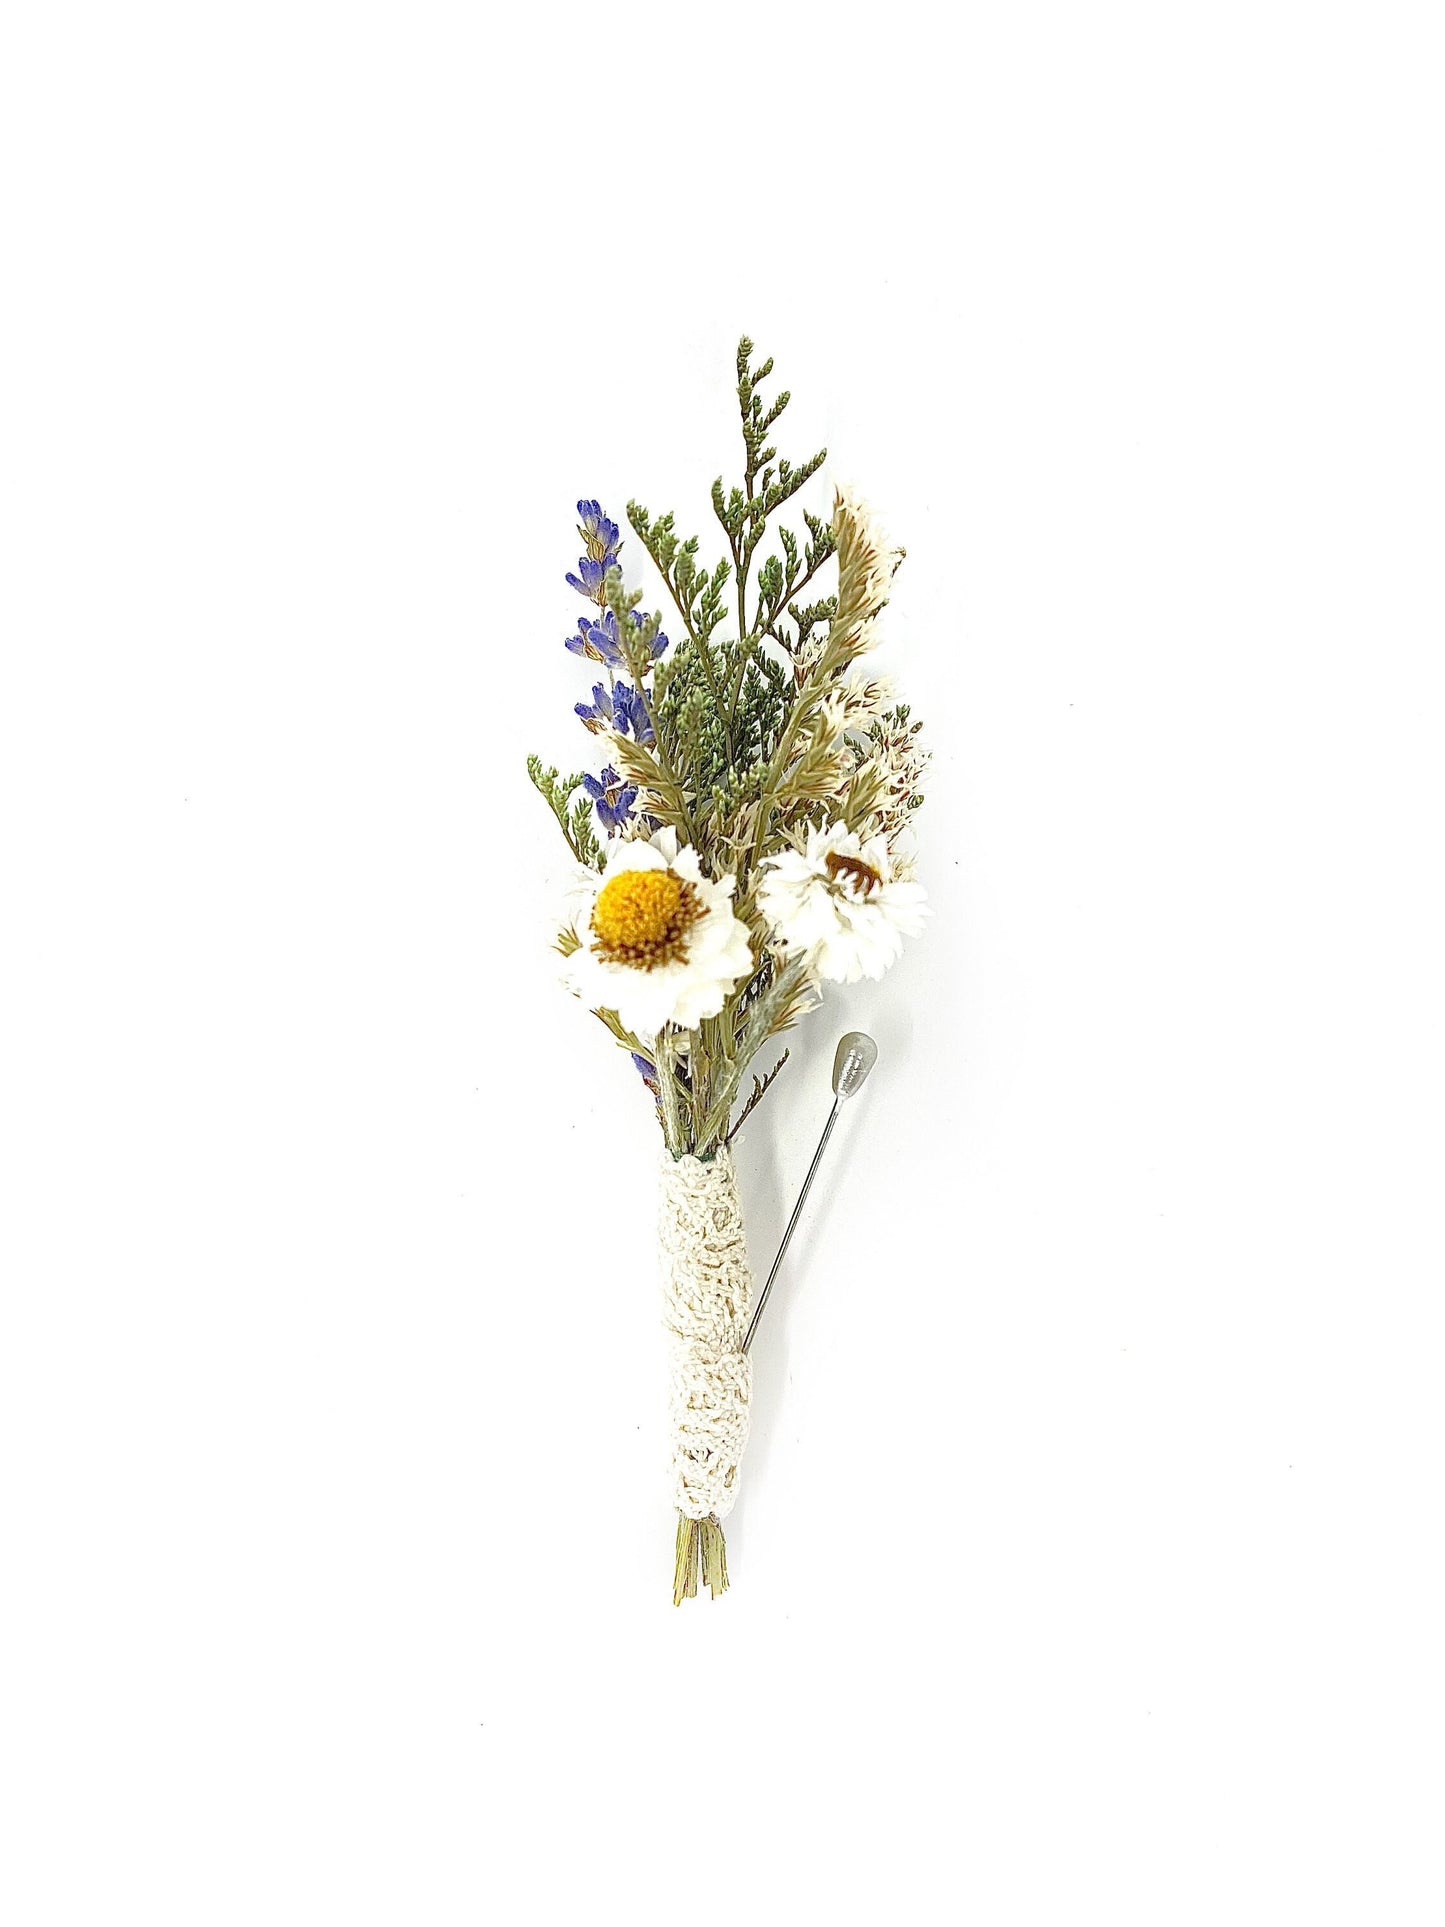 Boutonniere, Dried Flowers, Wedding Accessories, Preserved Floral, Bridal, Lavender, Decor, Ammobium, German Statice